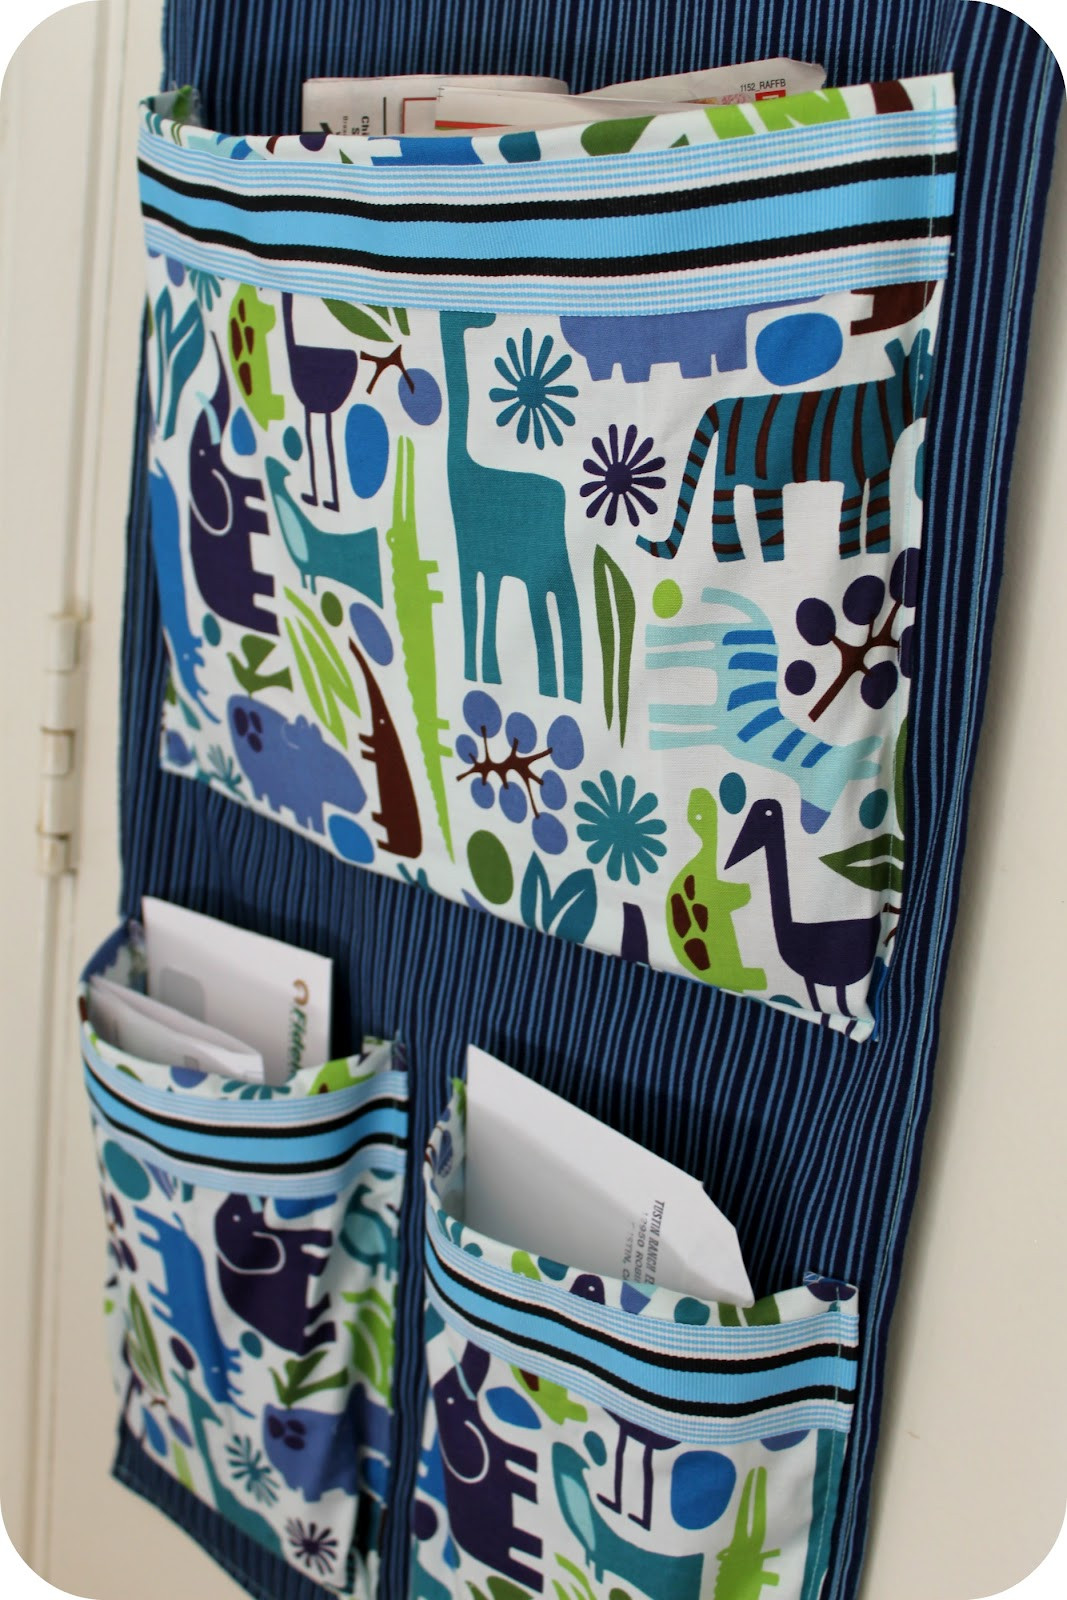 DIY Pocket Organizer
 DiY Project Sew a Fabric Mail Organizer for the Wall